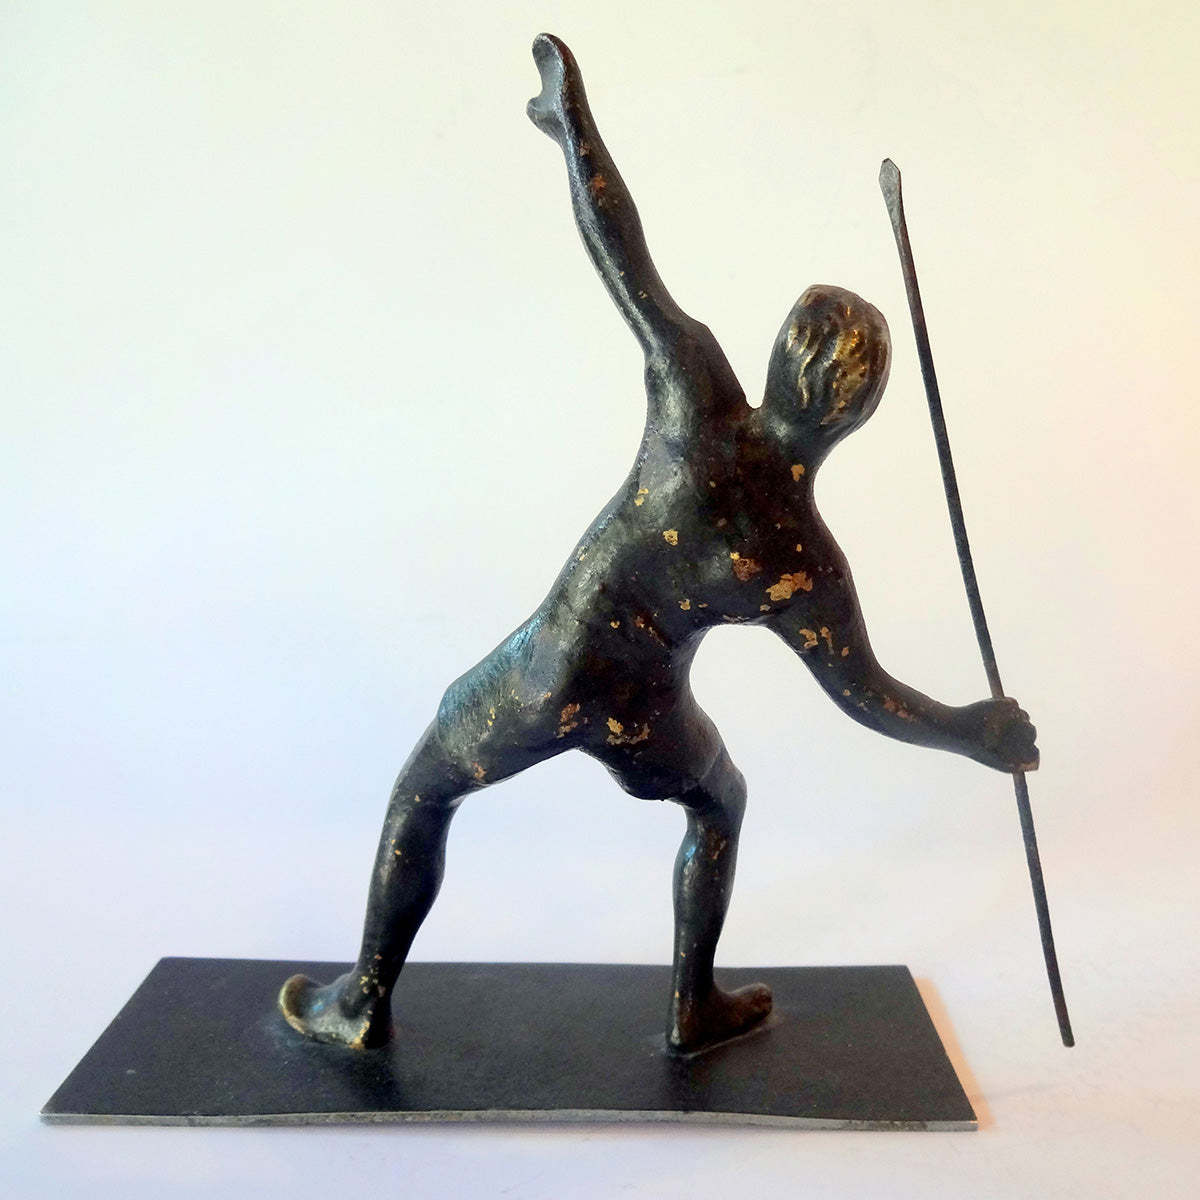 Wienerbronze figur forestillende spydkaster af bronze